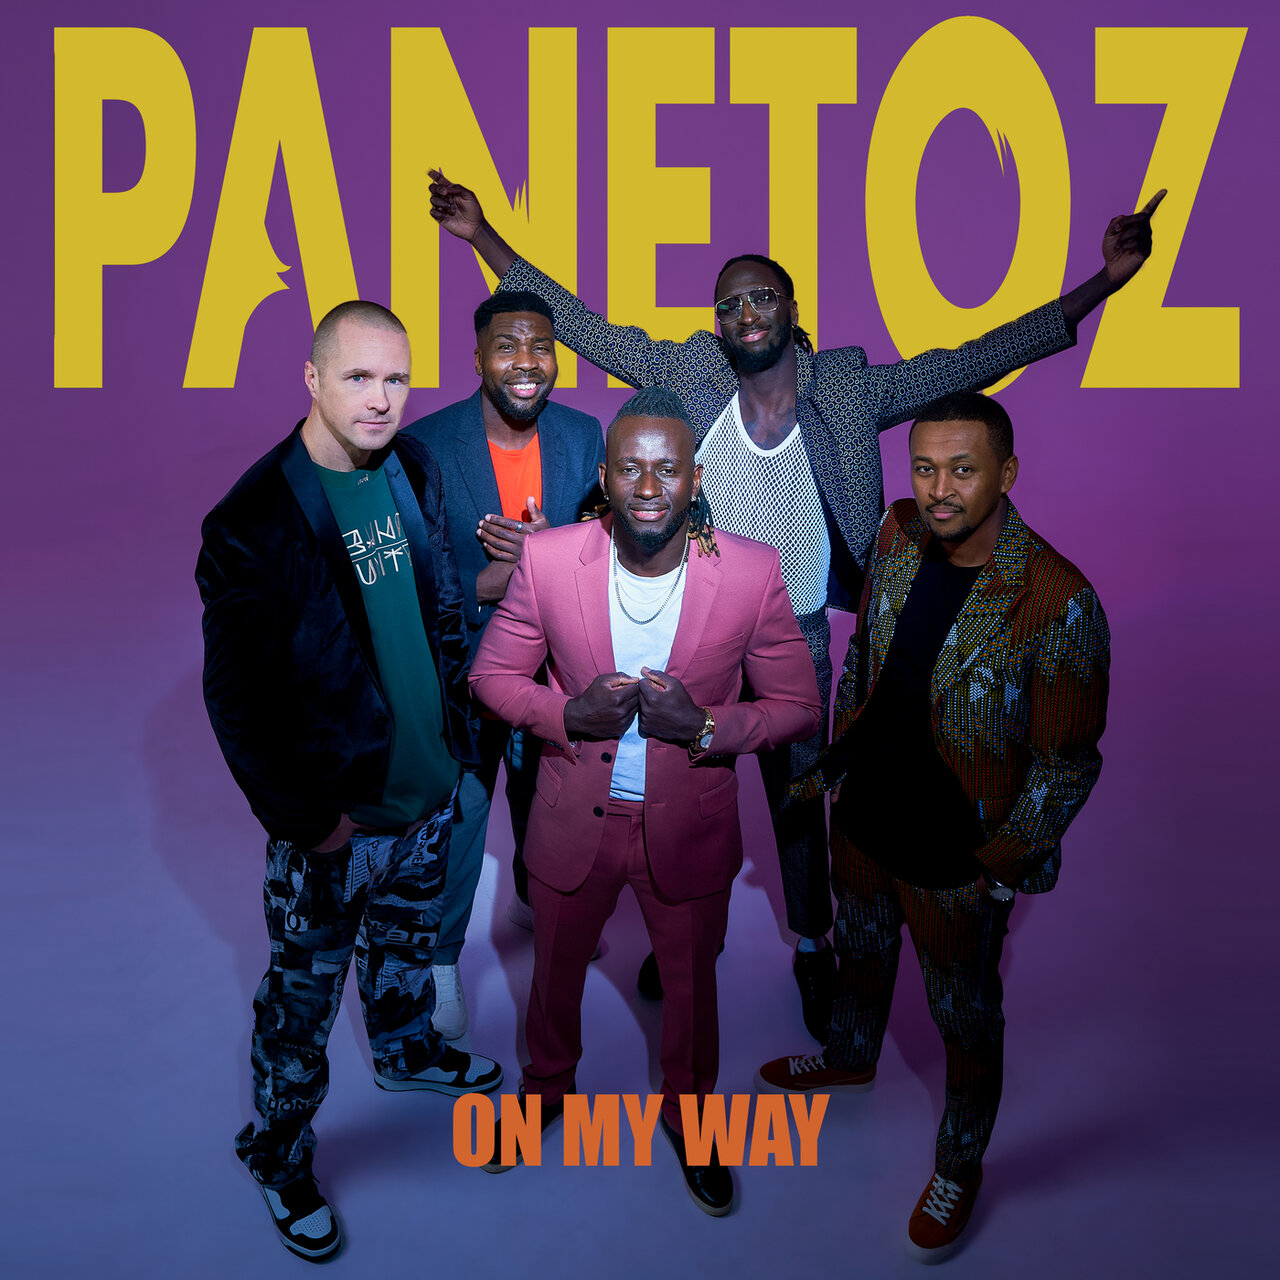 Panetoz On My Way cover artwork